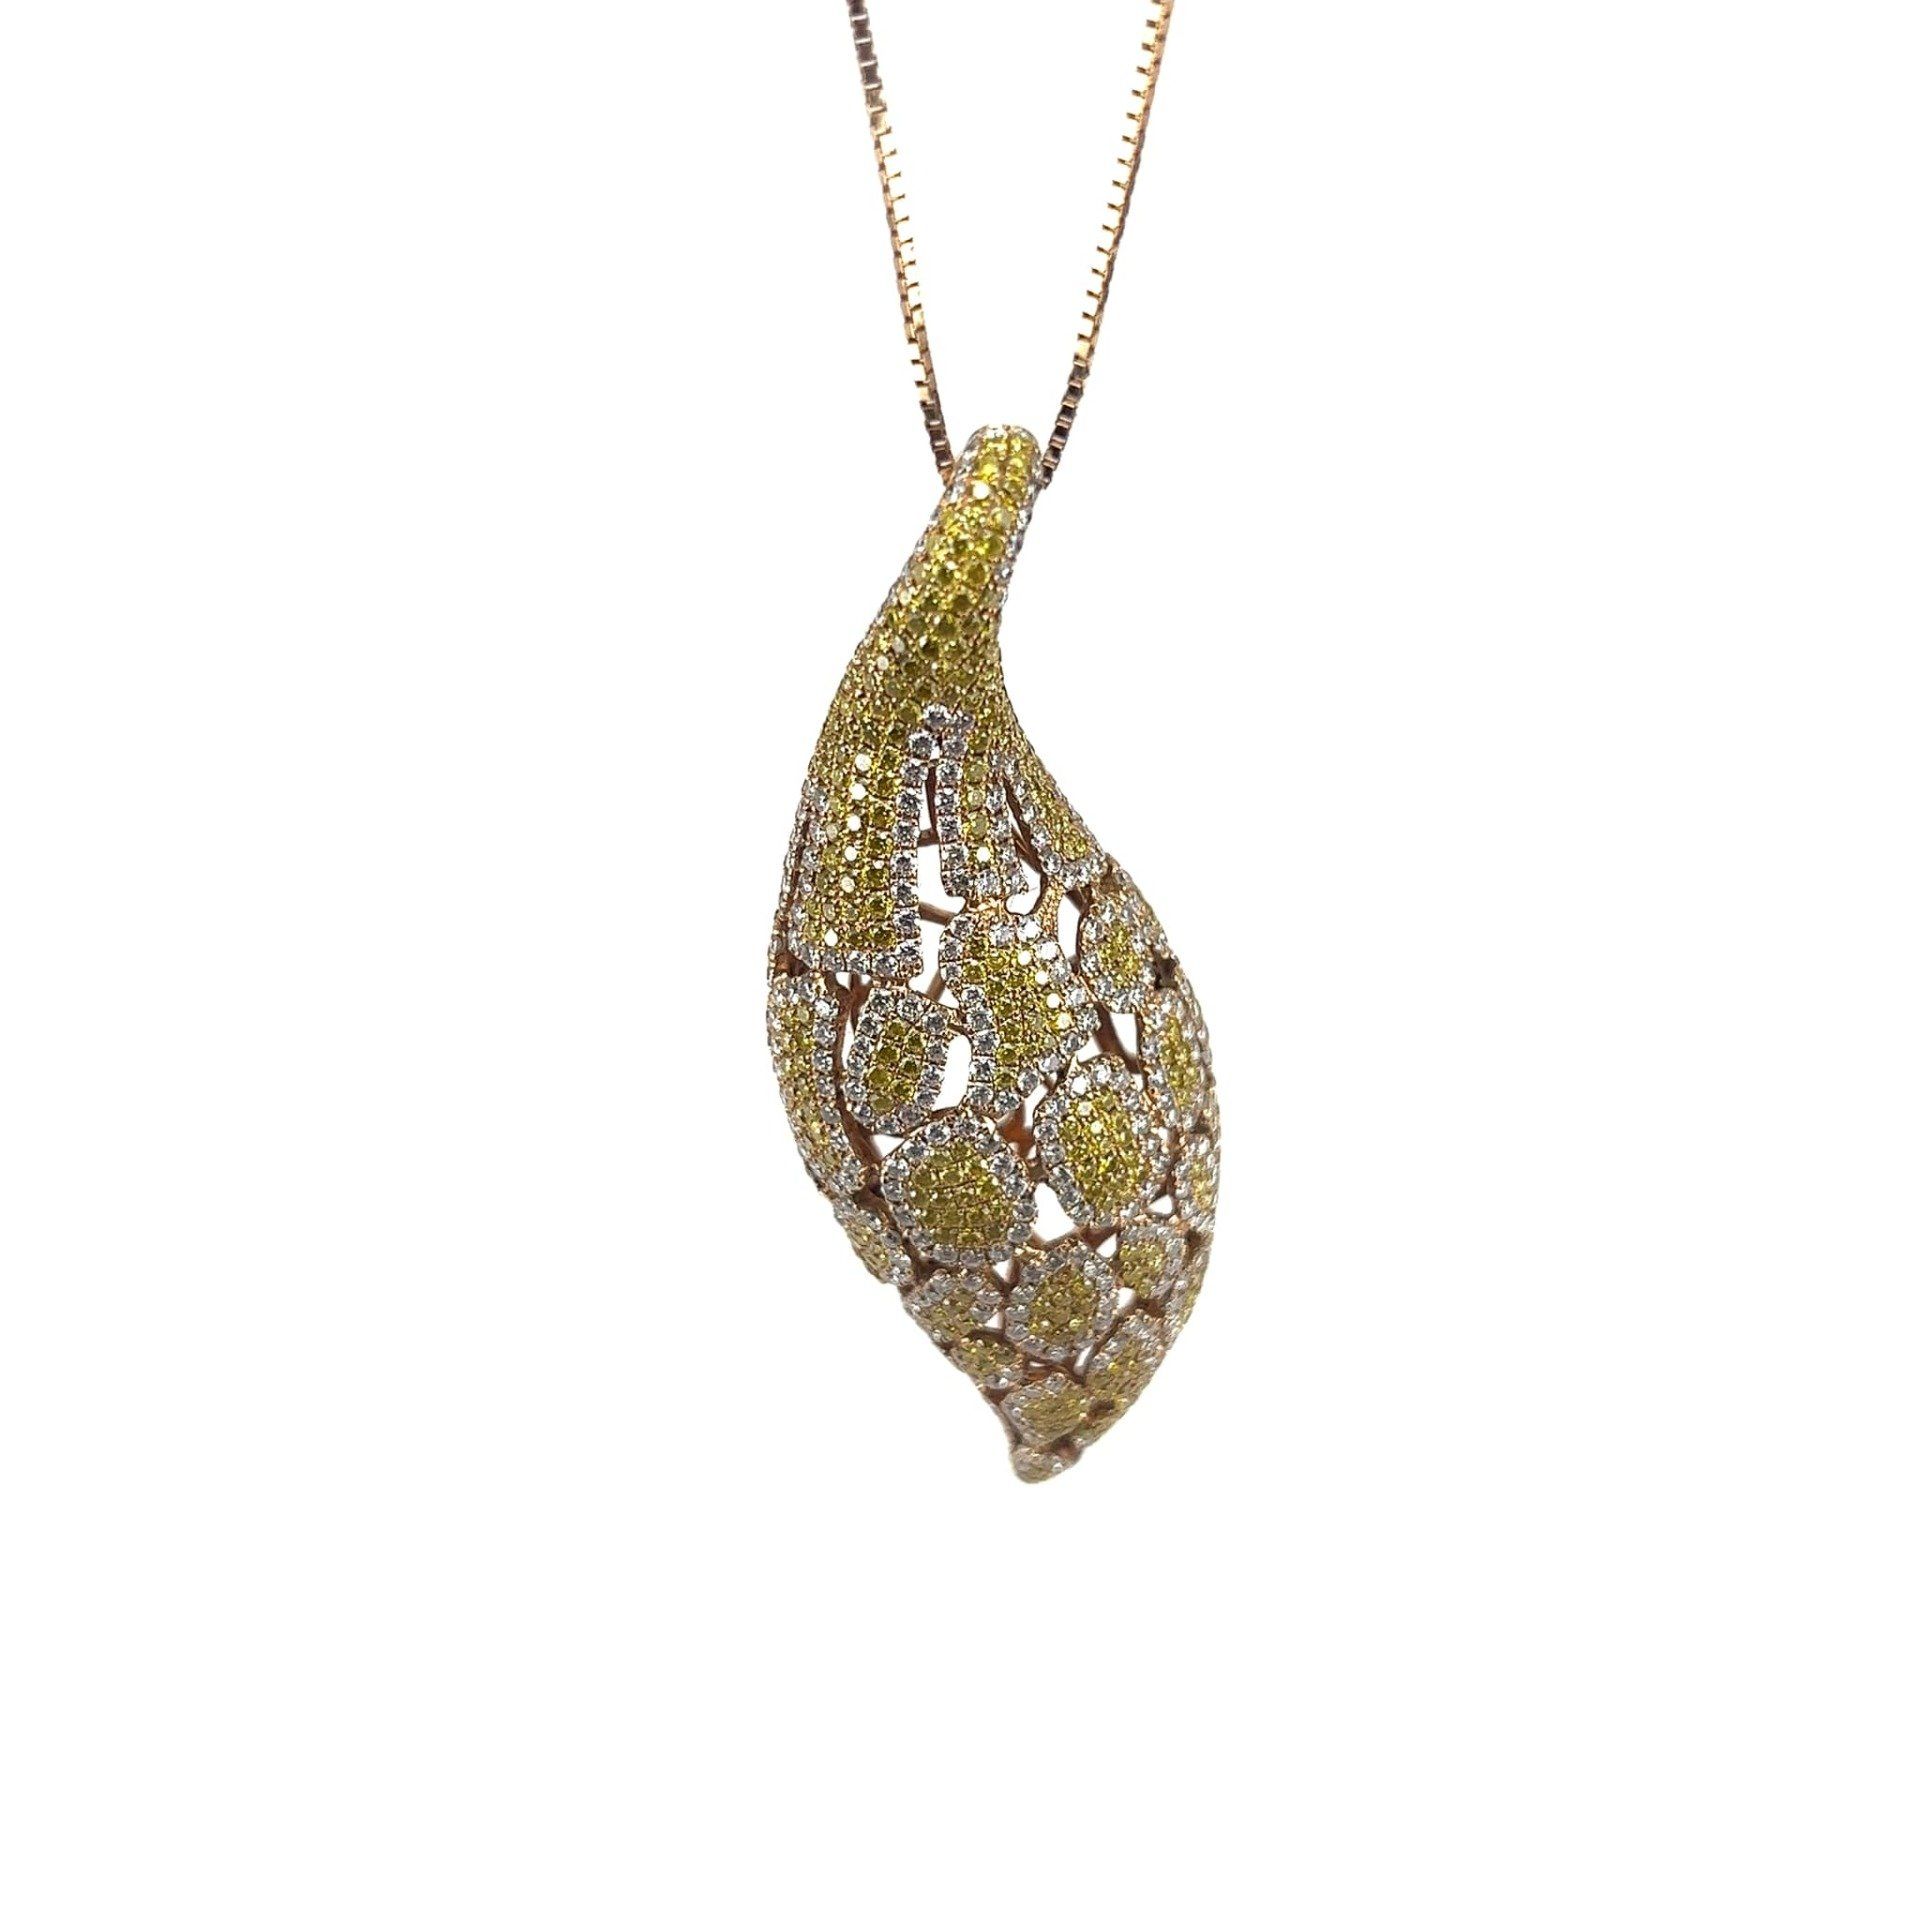 Diamond studded pendant necklace custom jewelry design by Gold Galore